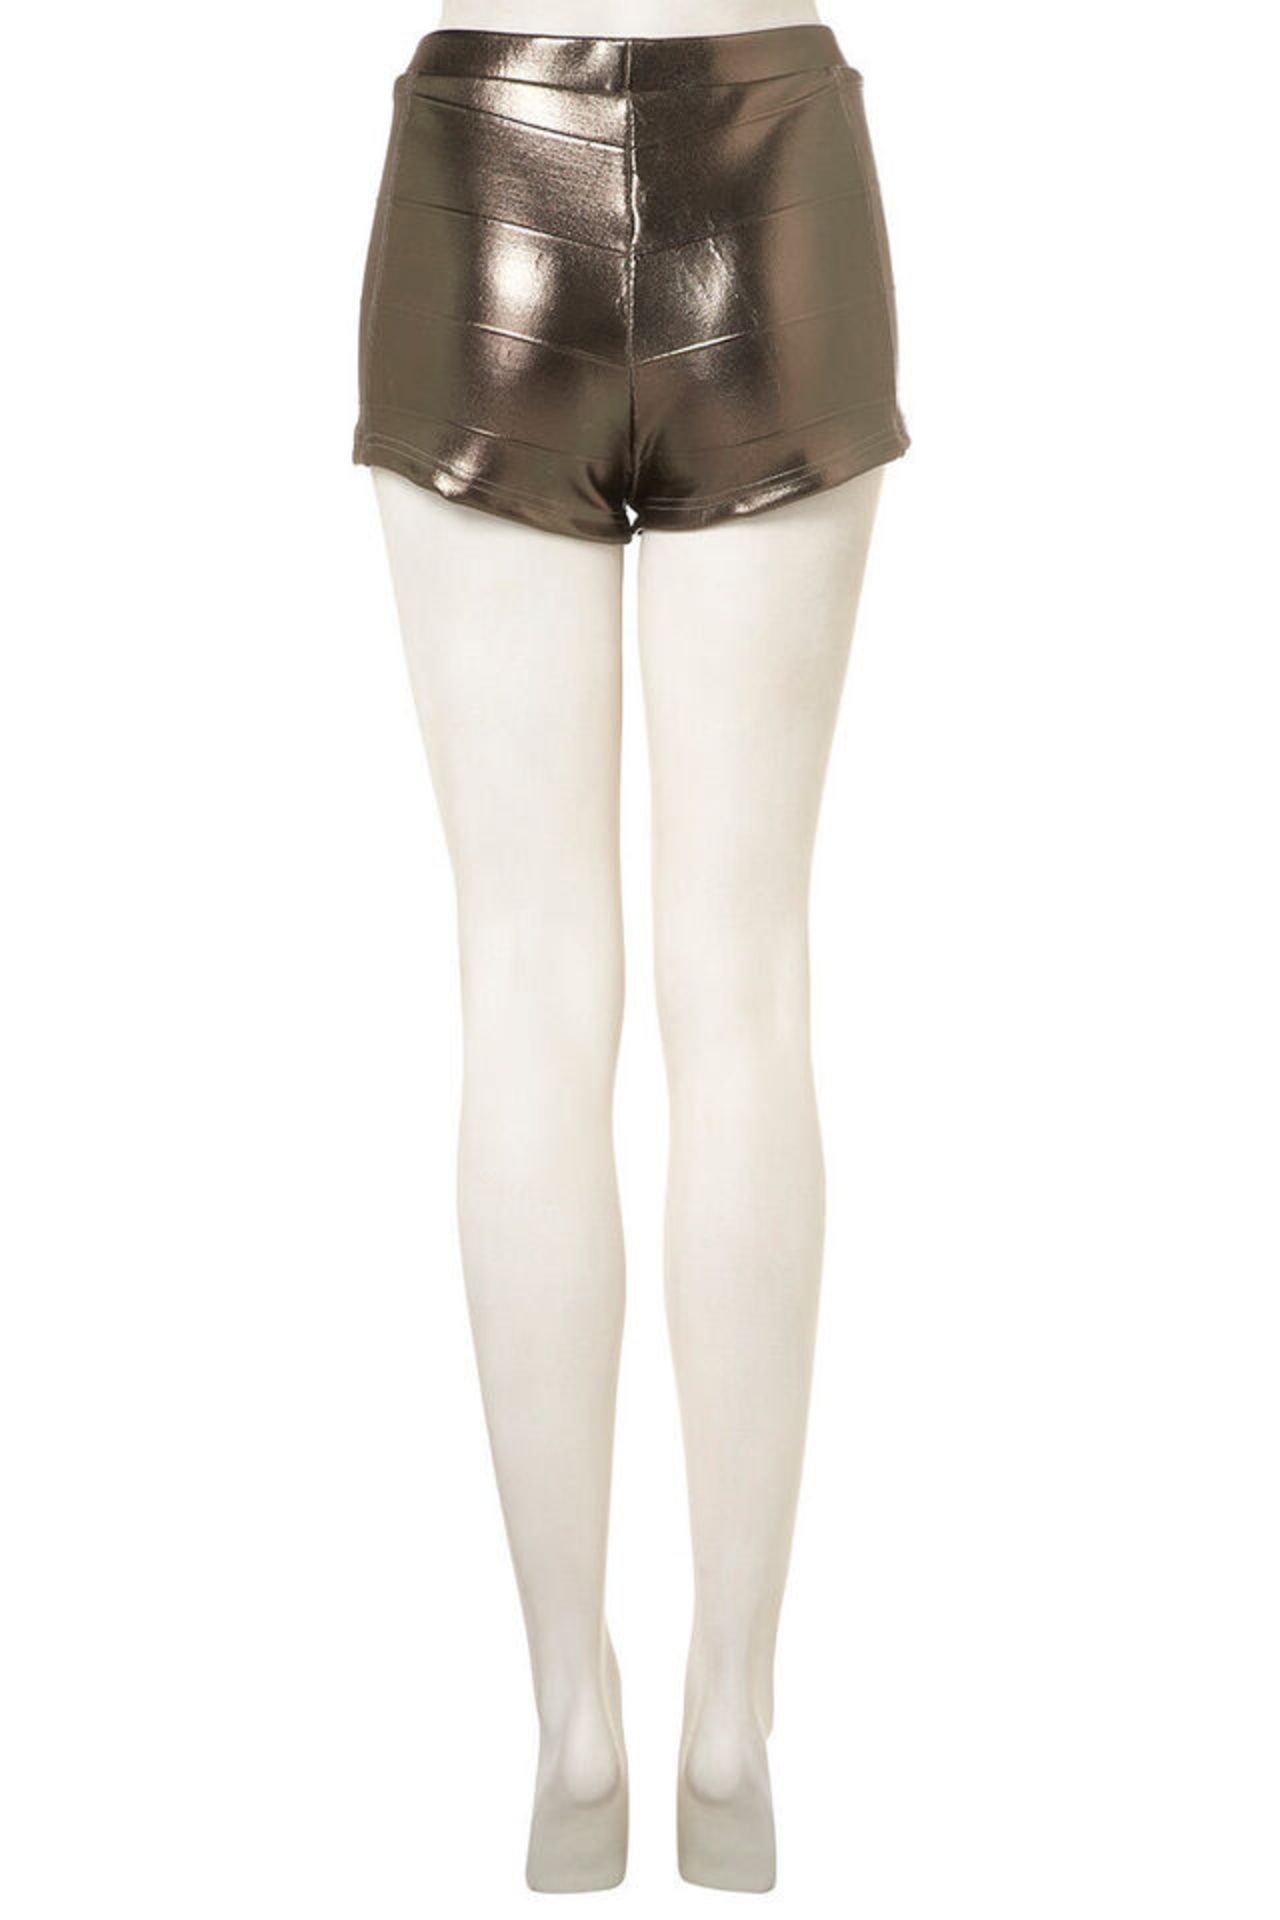 New Tags In Bags Topshop Ladies Khaki Foil Knickers Hot Pants Shorts x 36 RRP £726 - Bild 2 aus 3